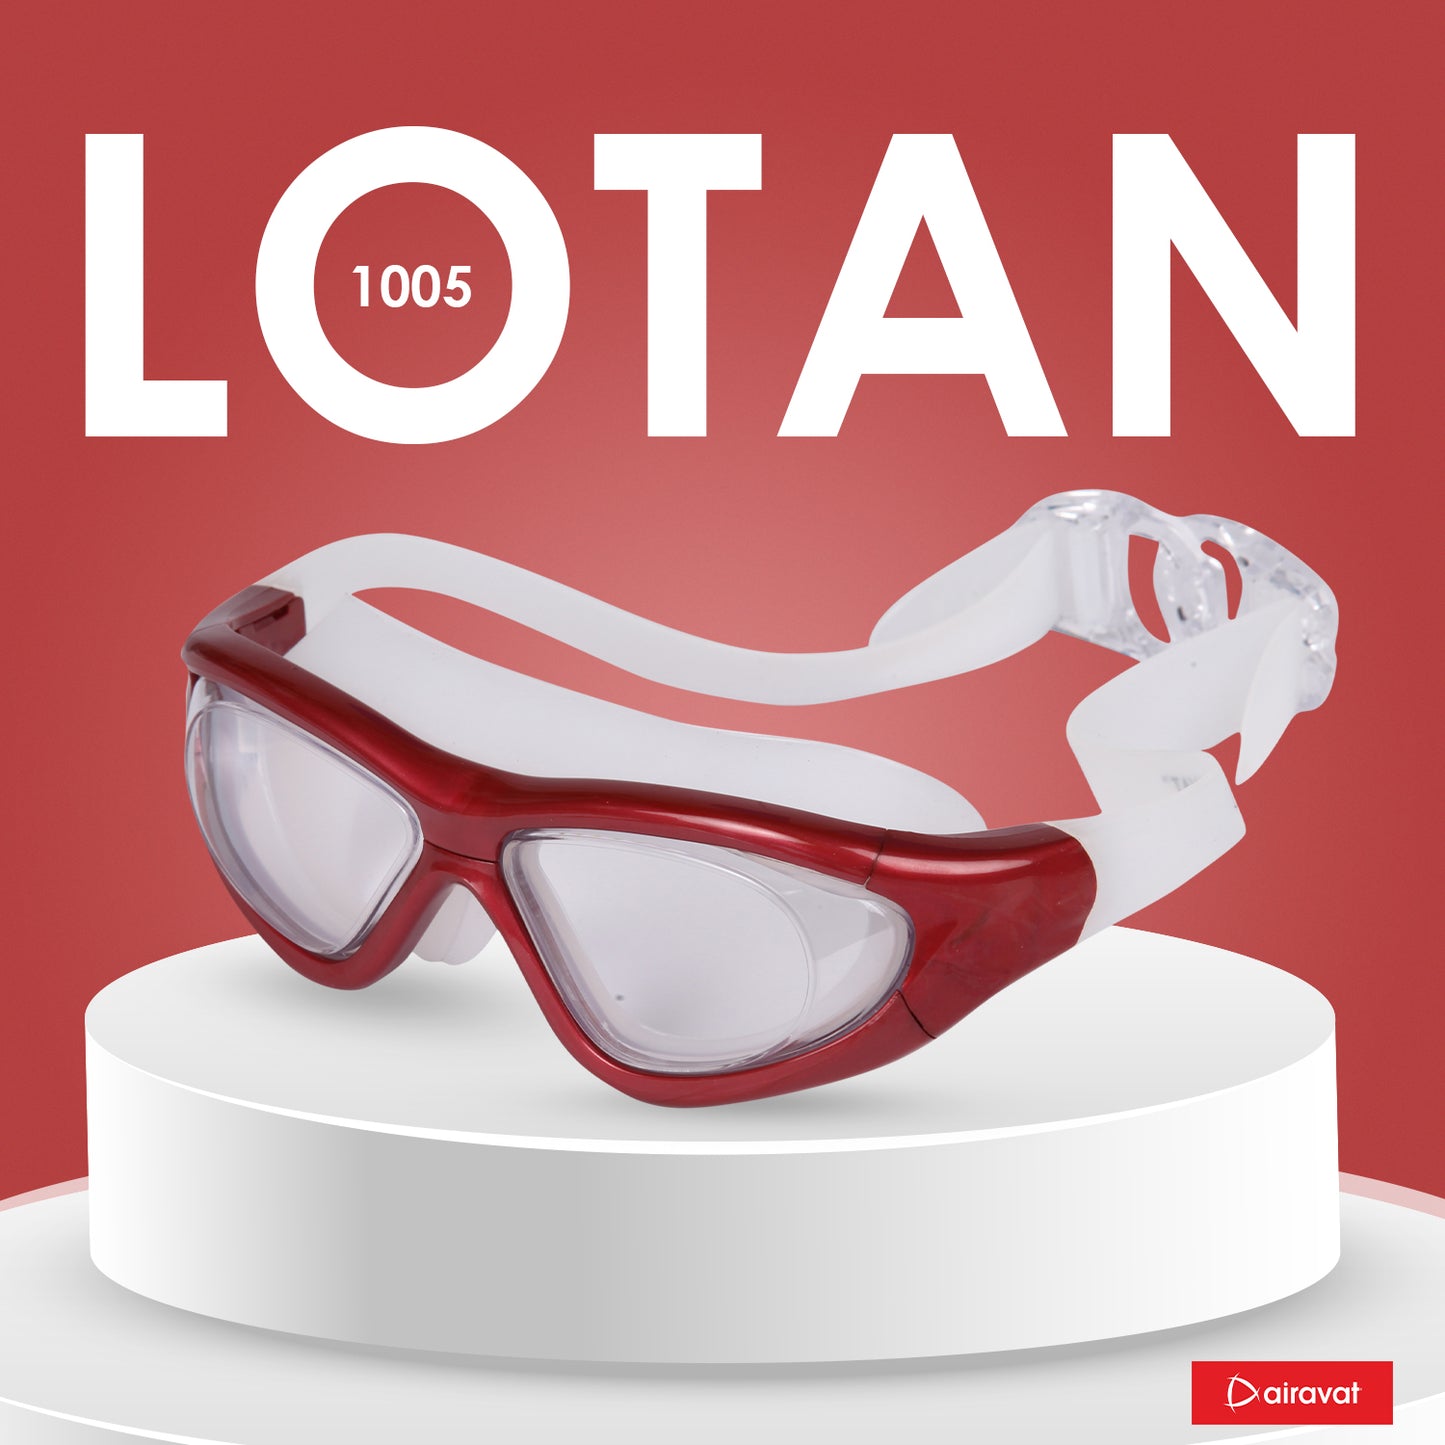 LOTAN 1005